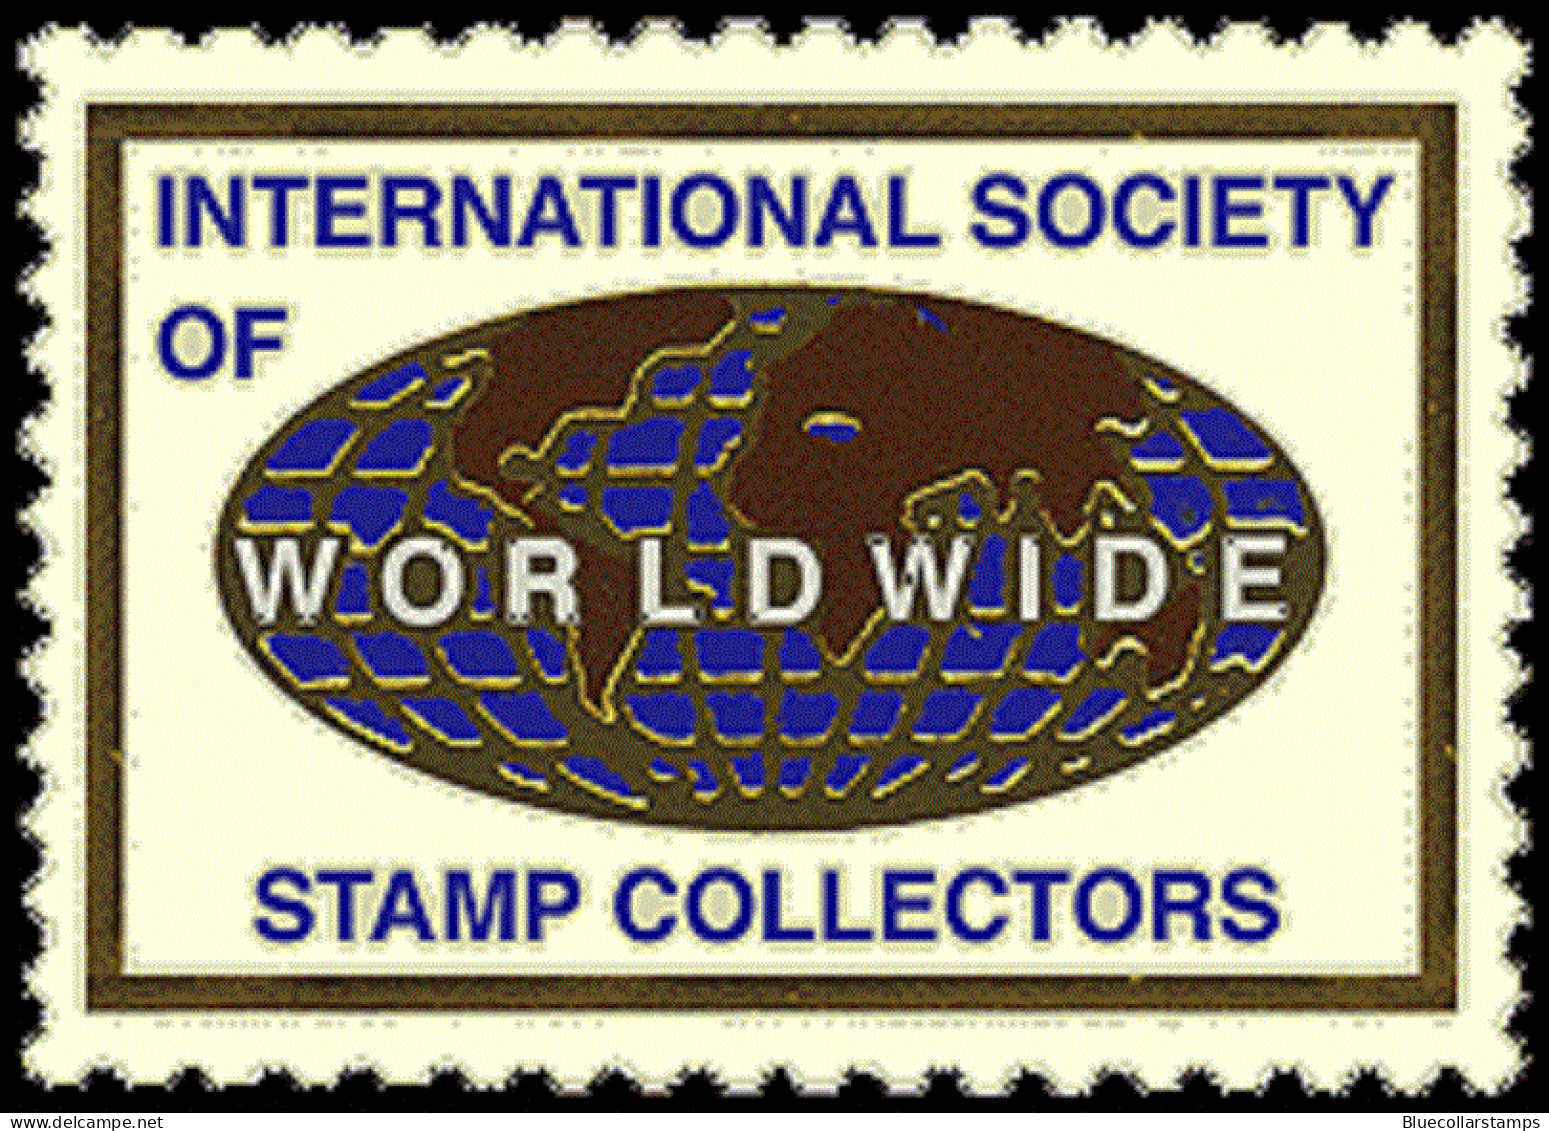 Persian/Iran Stamp, Scott# 408, Inspected, CTO, Magenta Surcharge, - Iran